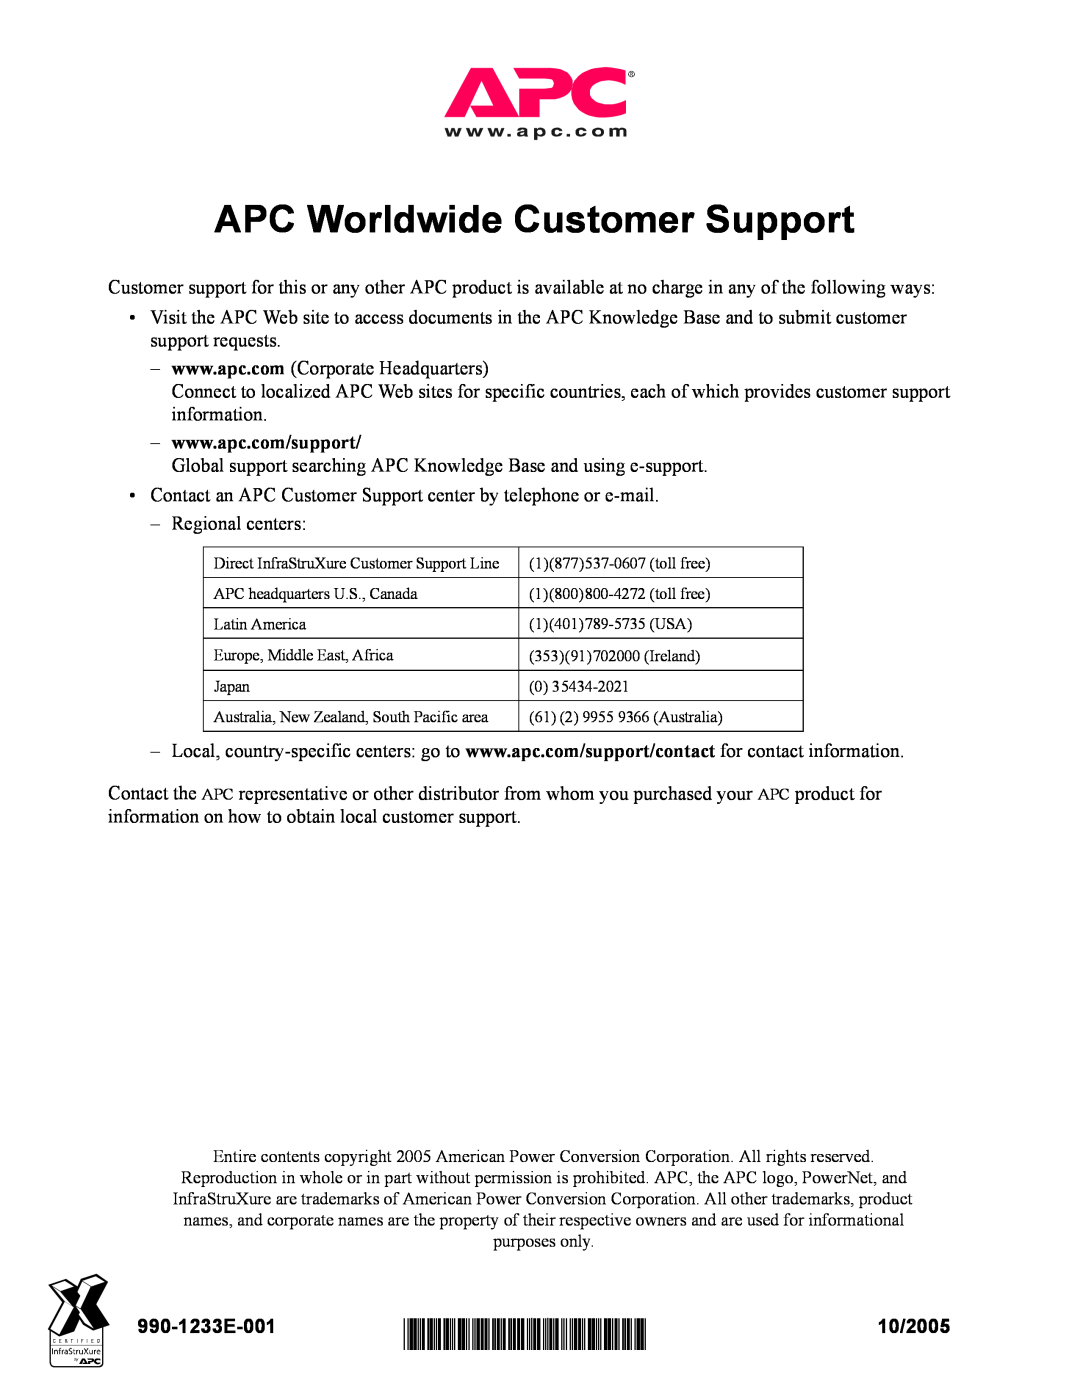 American Power Conversion Automatic Transfer quick start APC Worldwide Customer Support, 990-1233E-001, 10/2005 